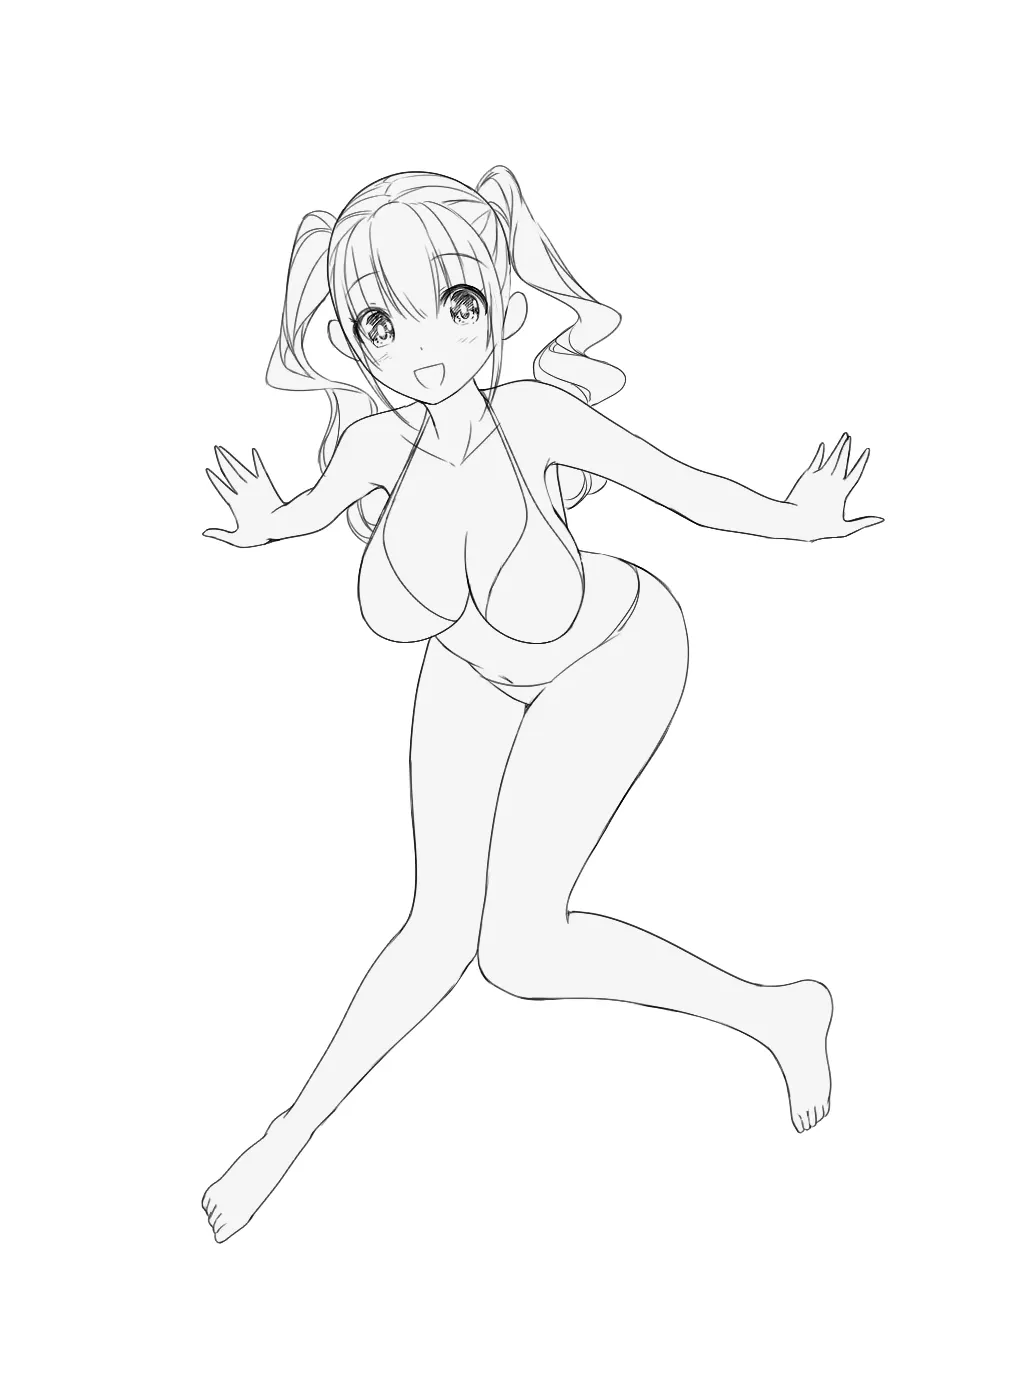 Anime Base Poses - Anime females jumping pose